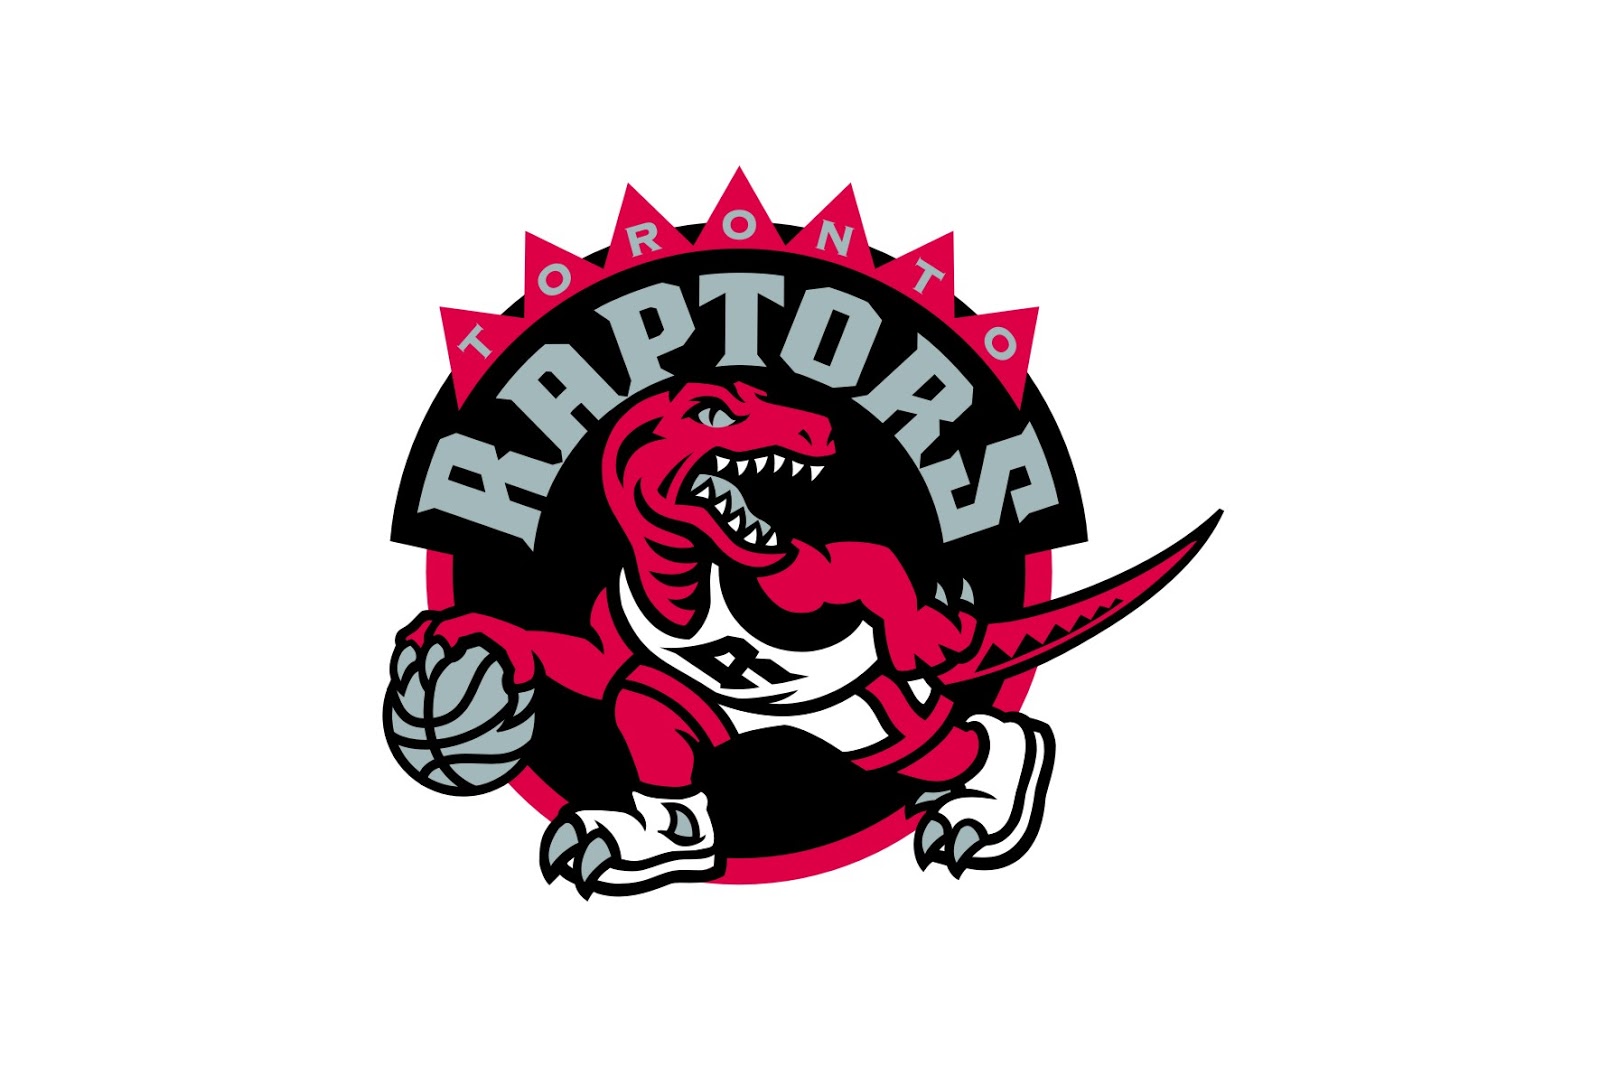 Toronto Raptors news